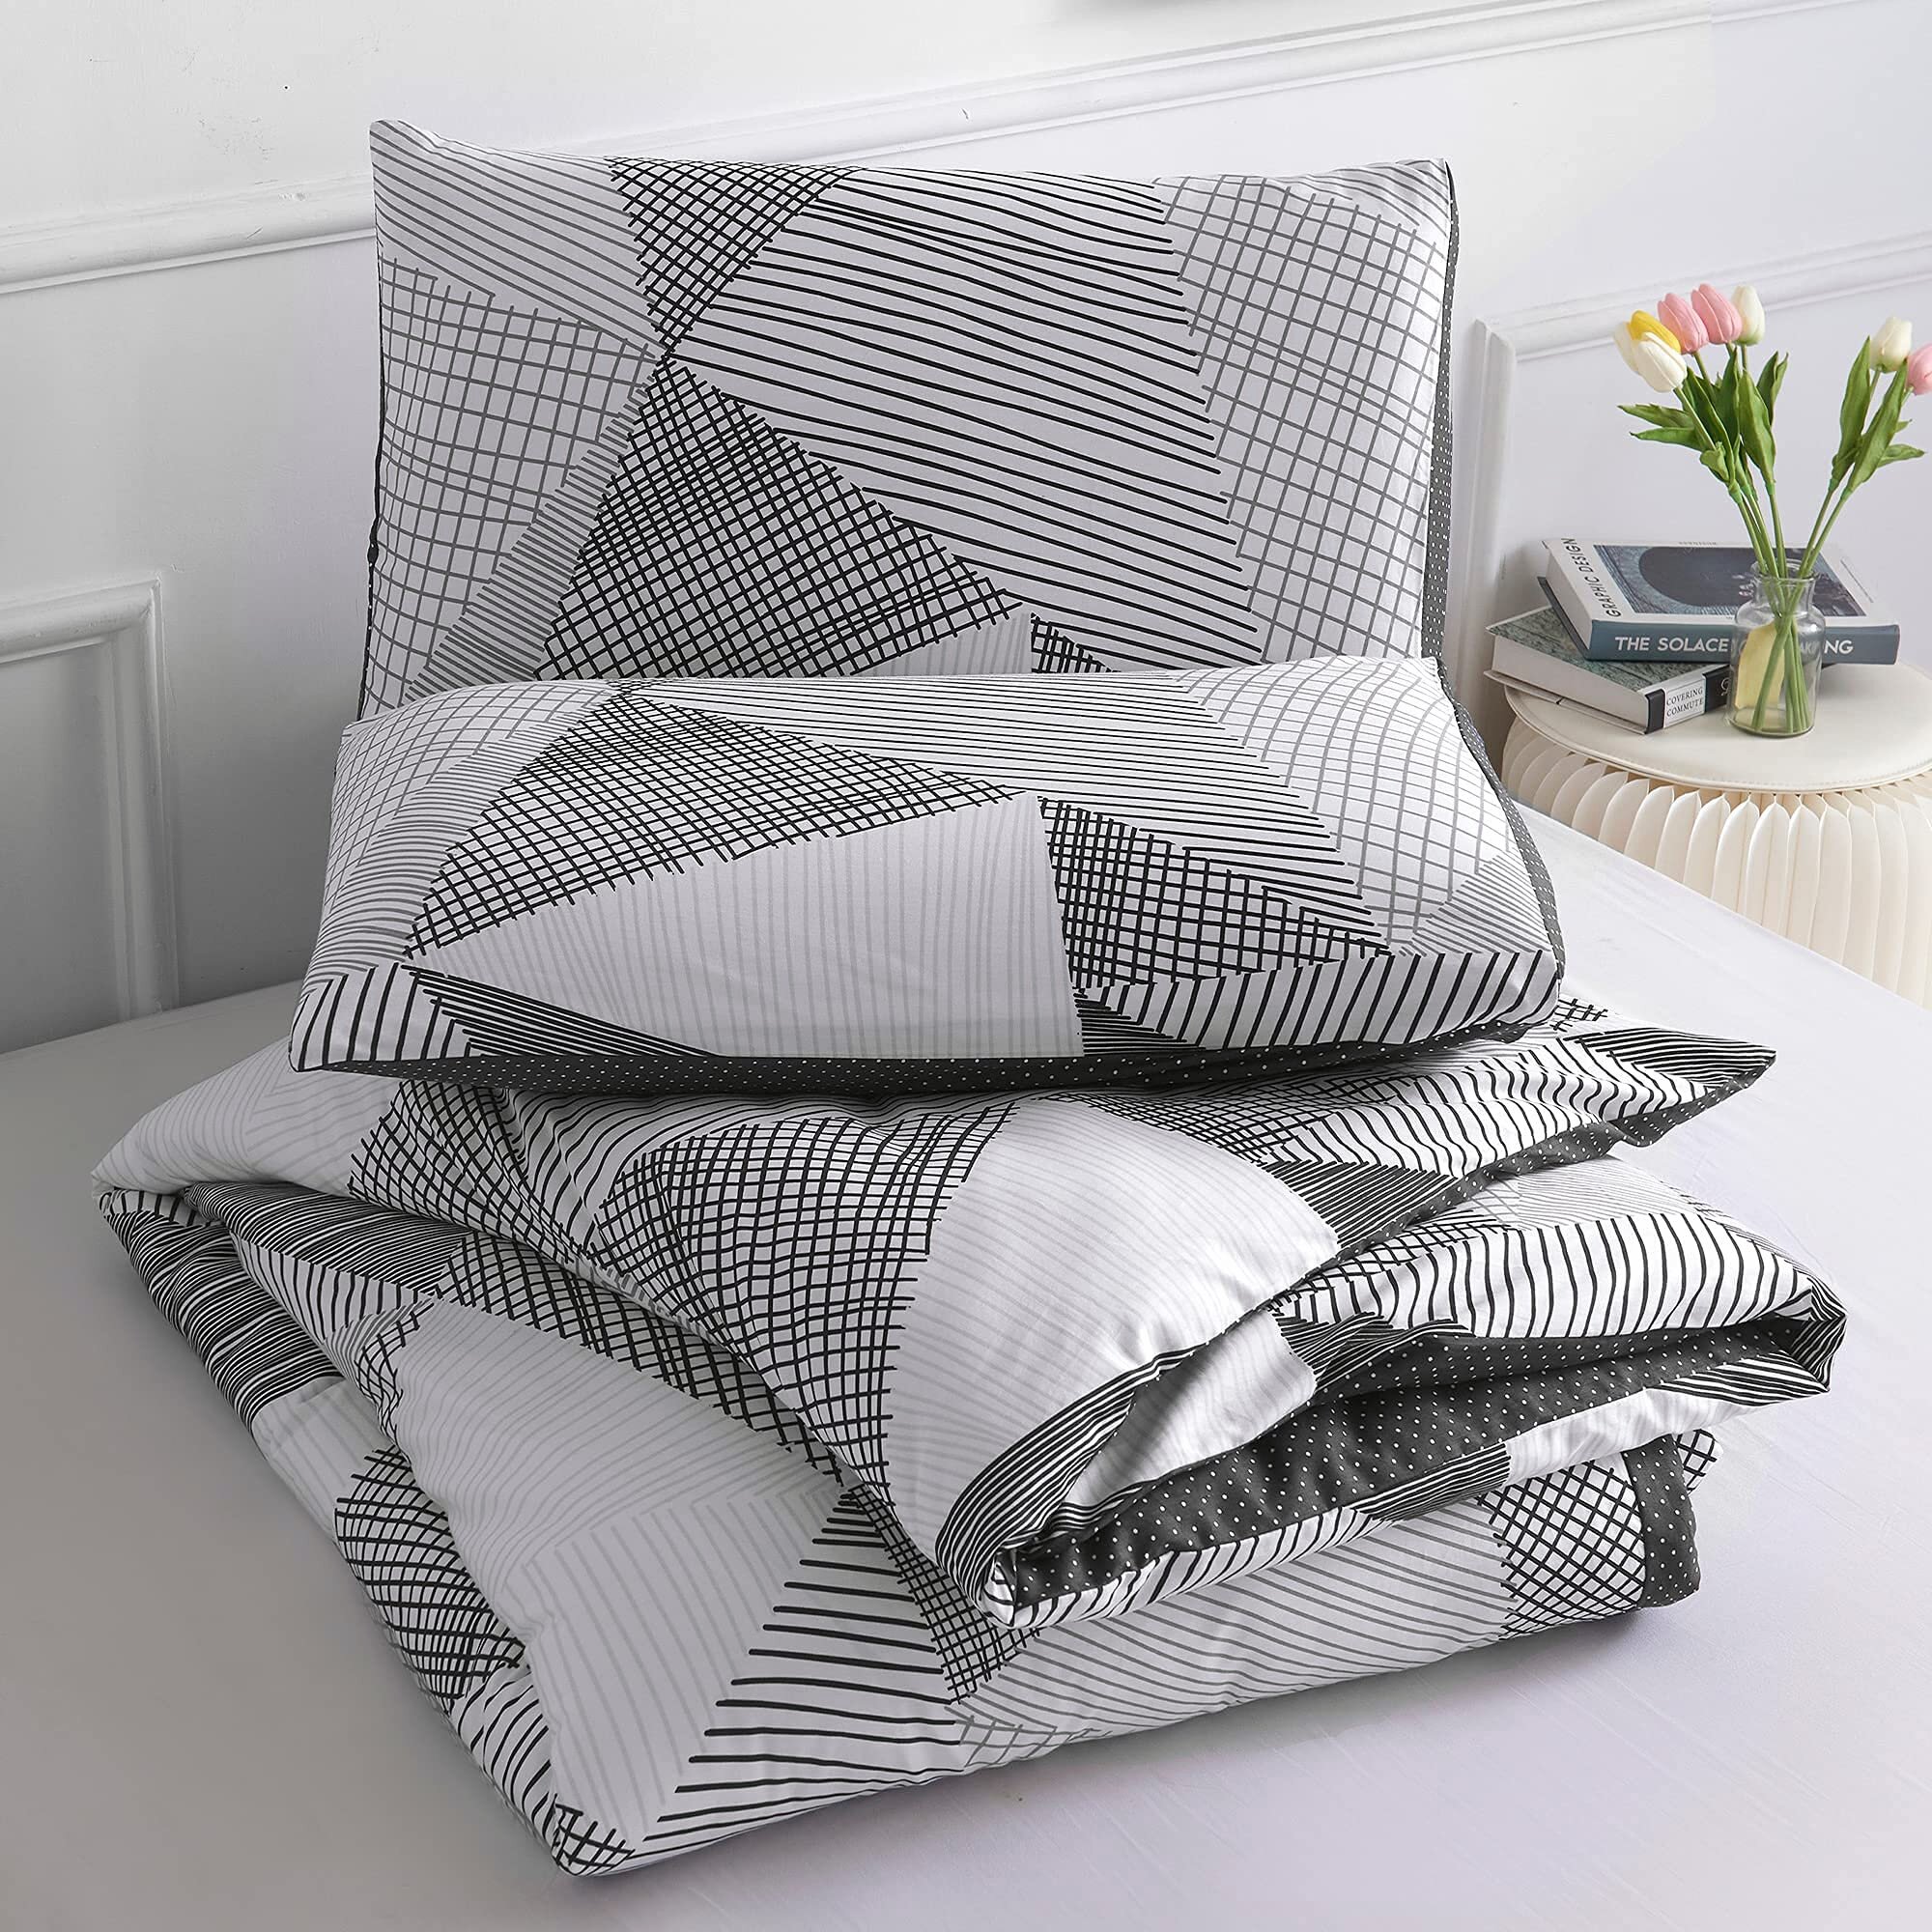 Luxury 100% Egyptian Cotton Duvet Cover with Pillow Case Bedding Set Stripes